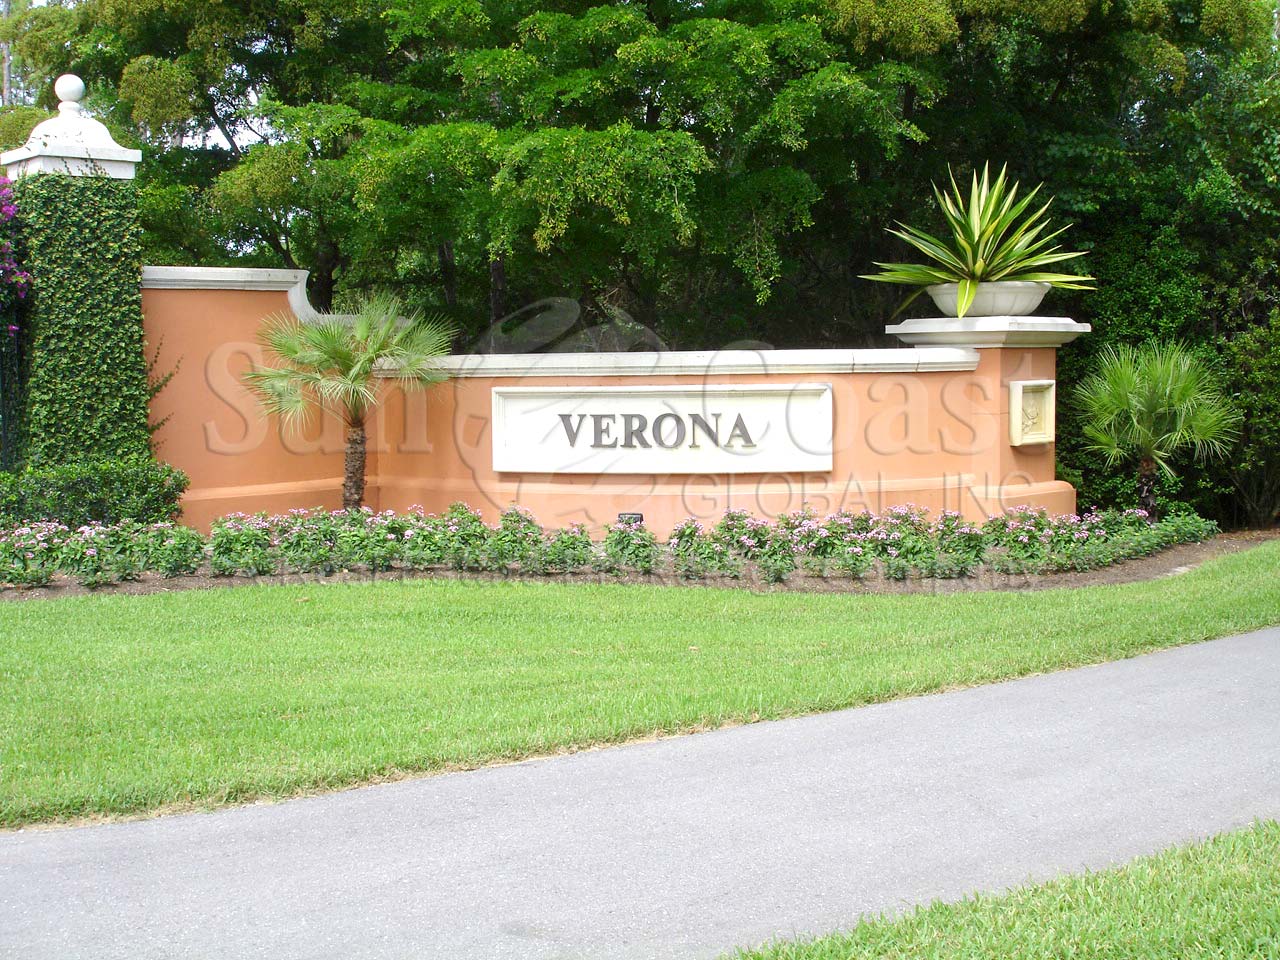 Verona sign